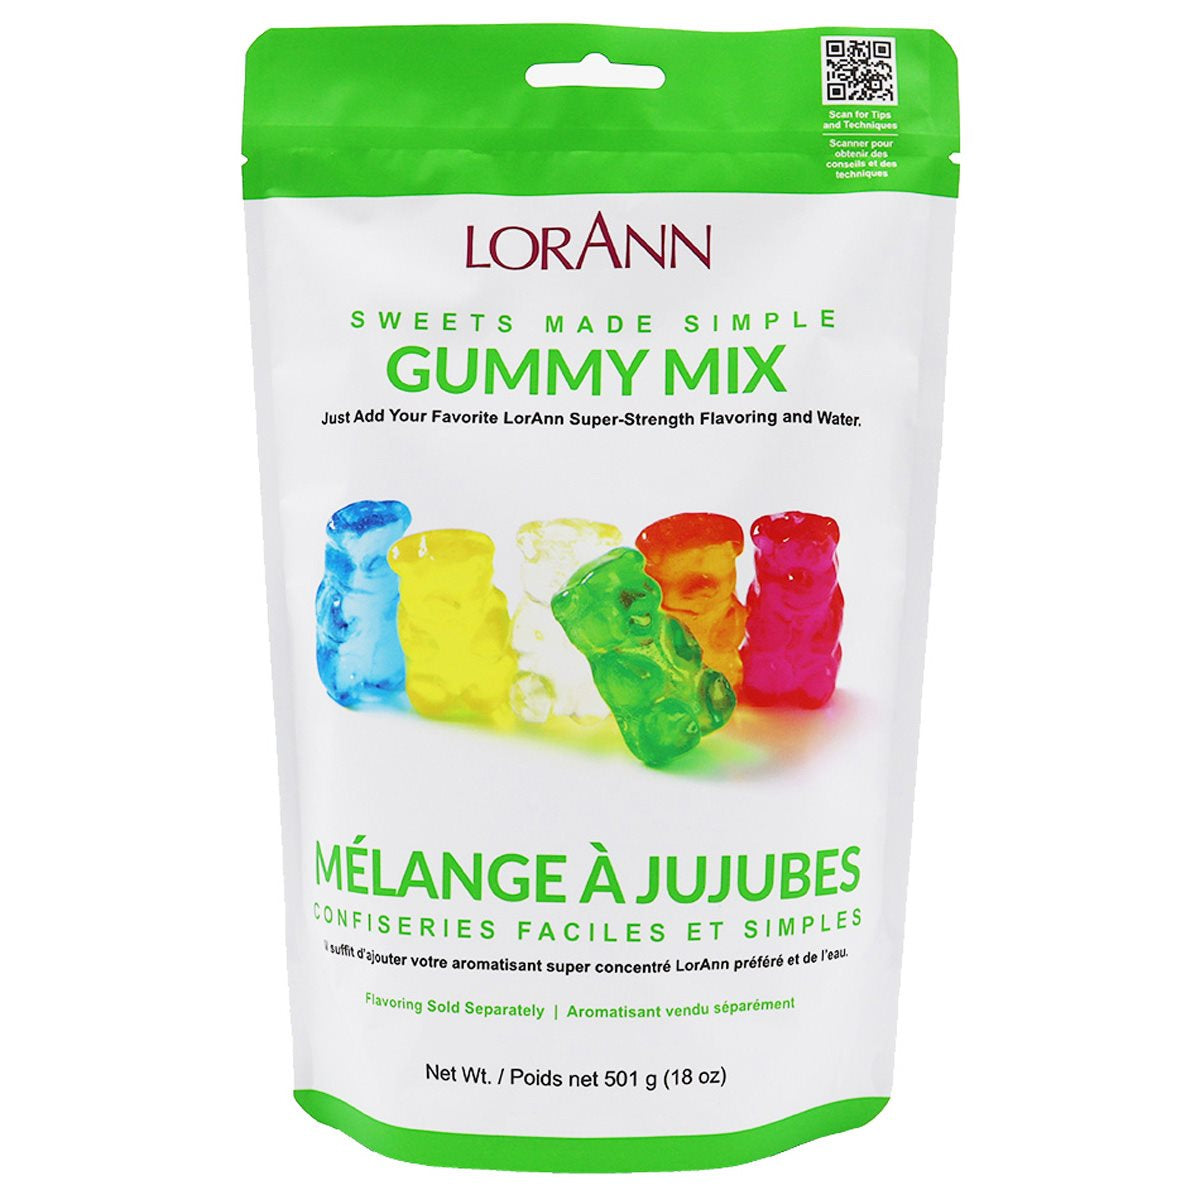 Lorann's Gummy Mix